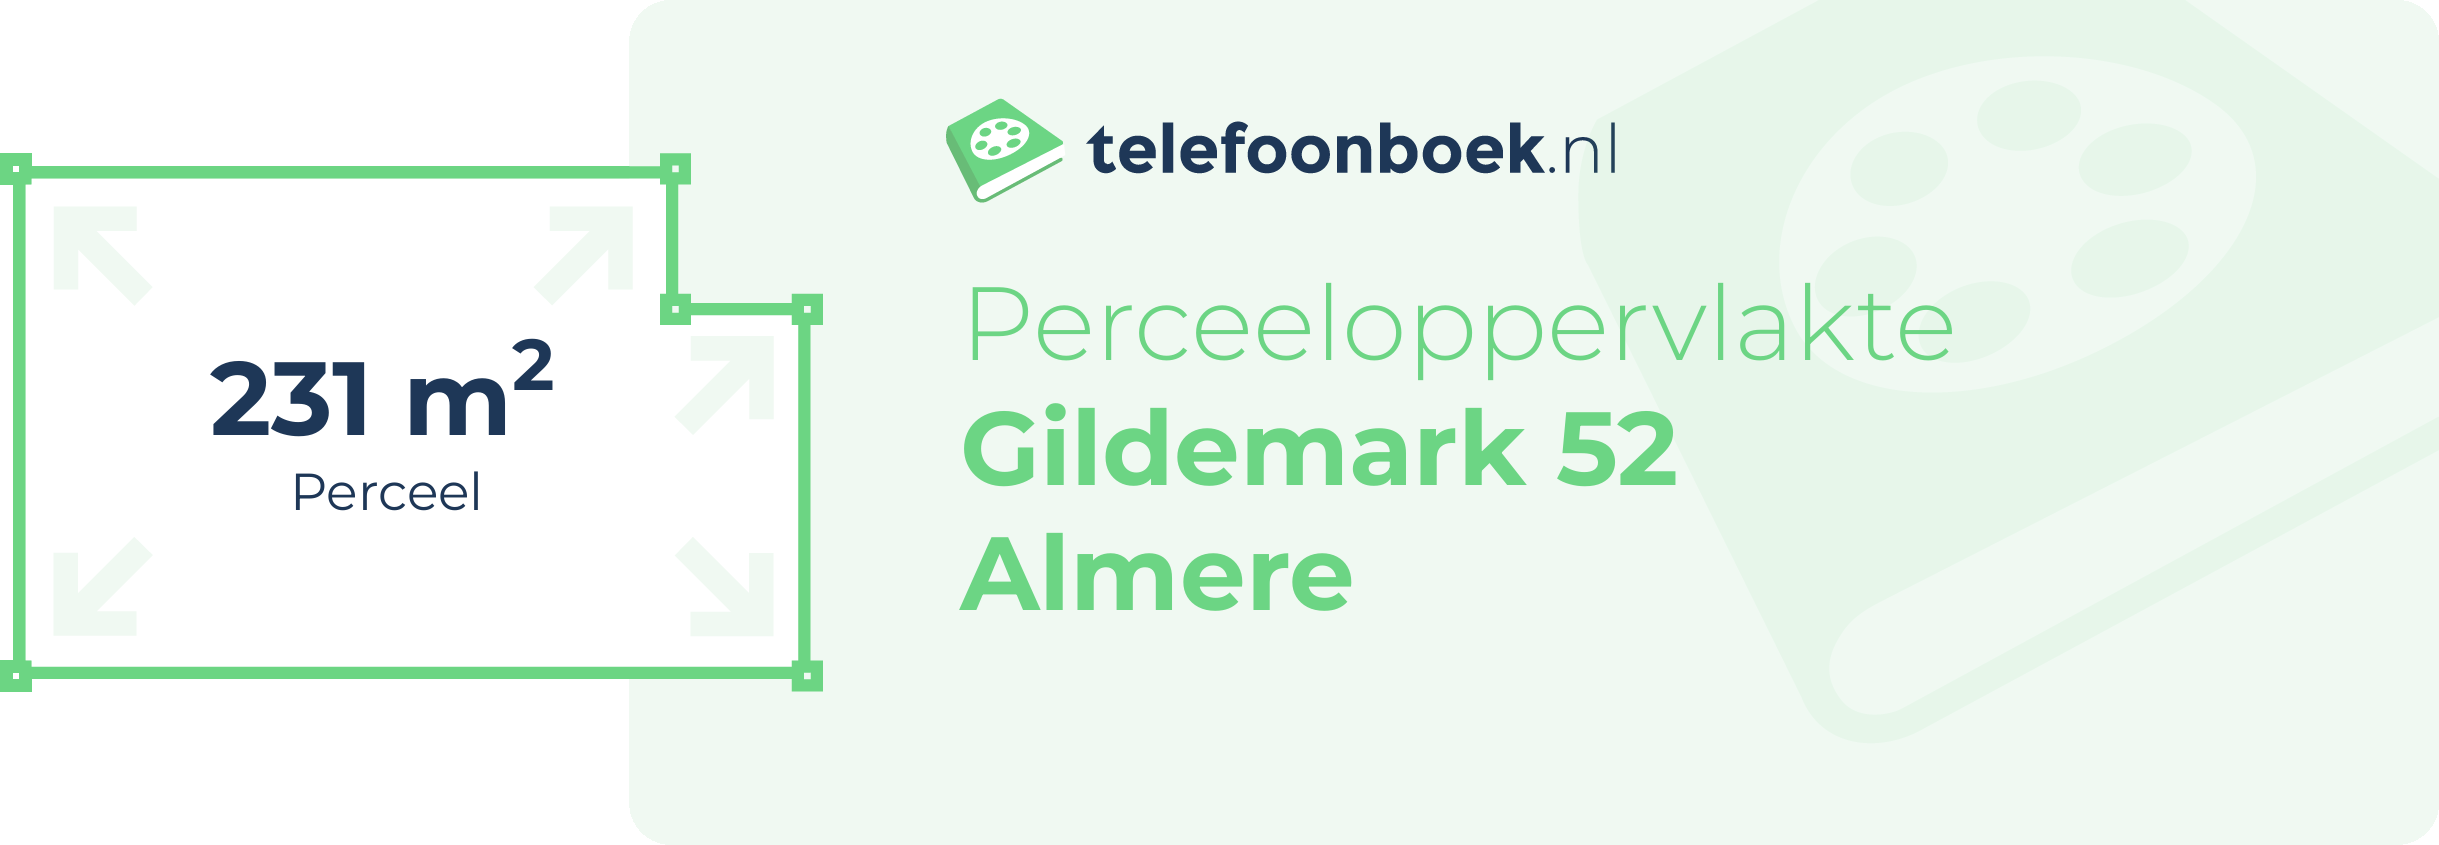 Perceeloppervlakte Gildemark 52 Almere